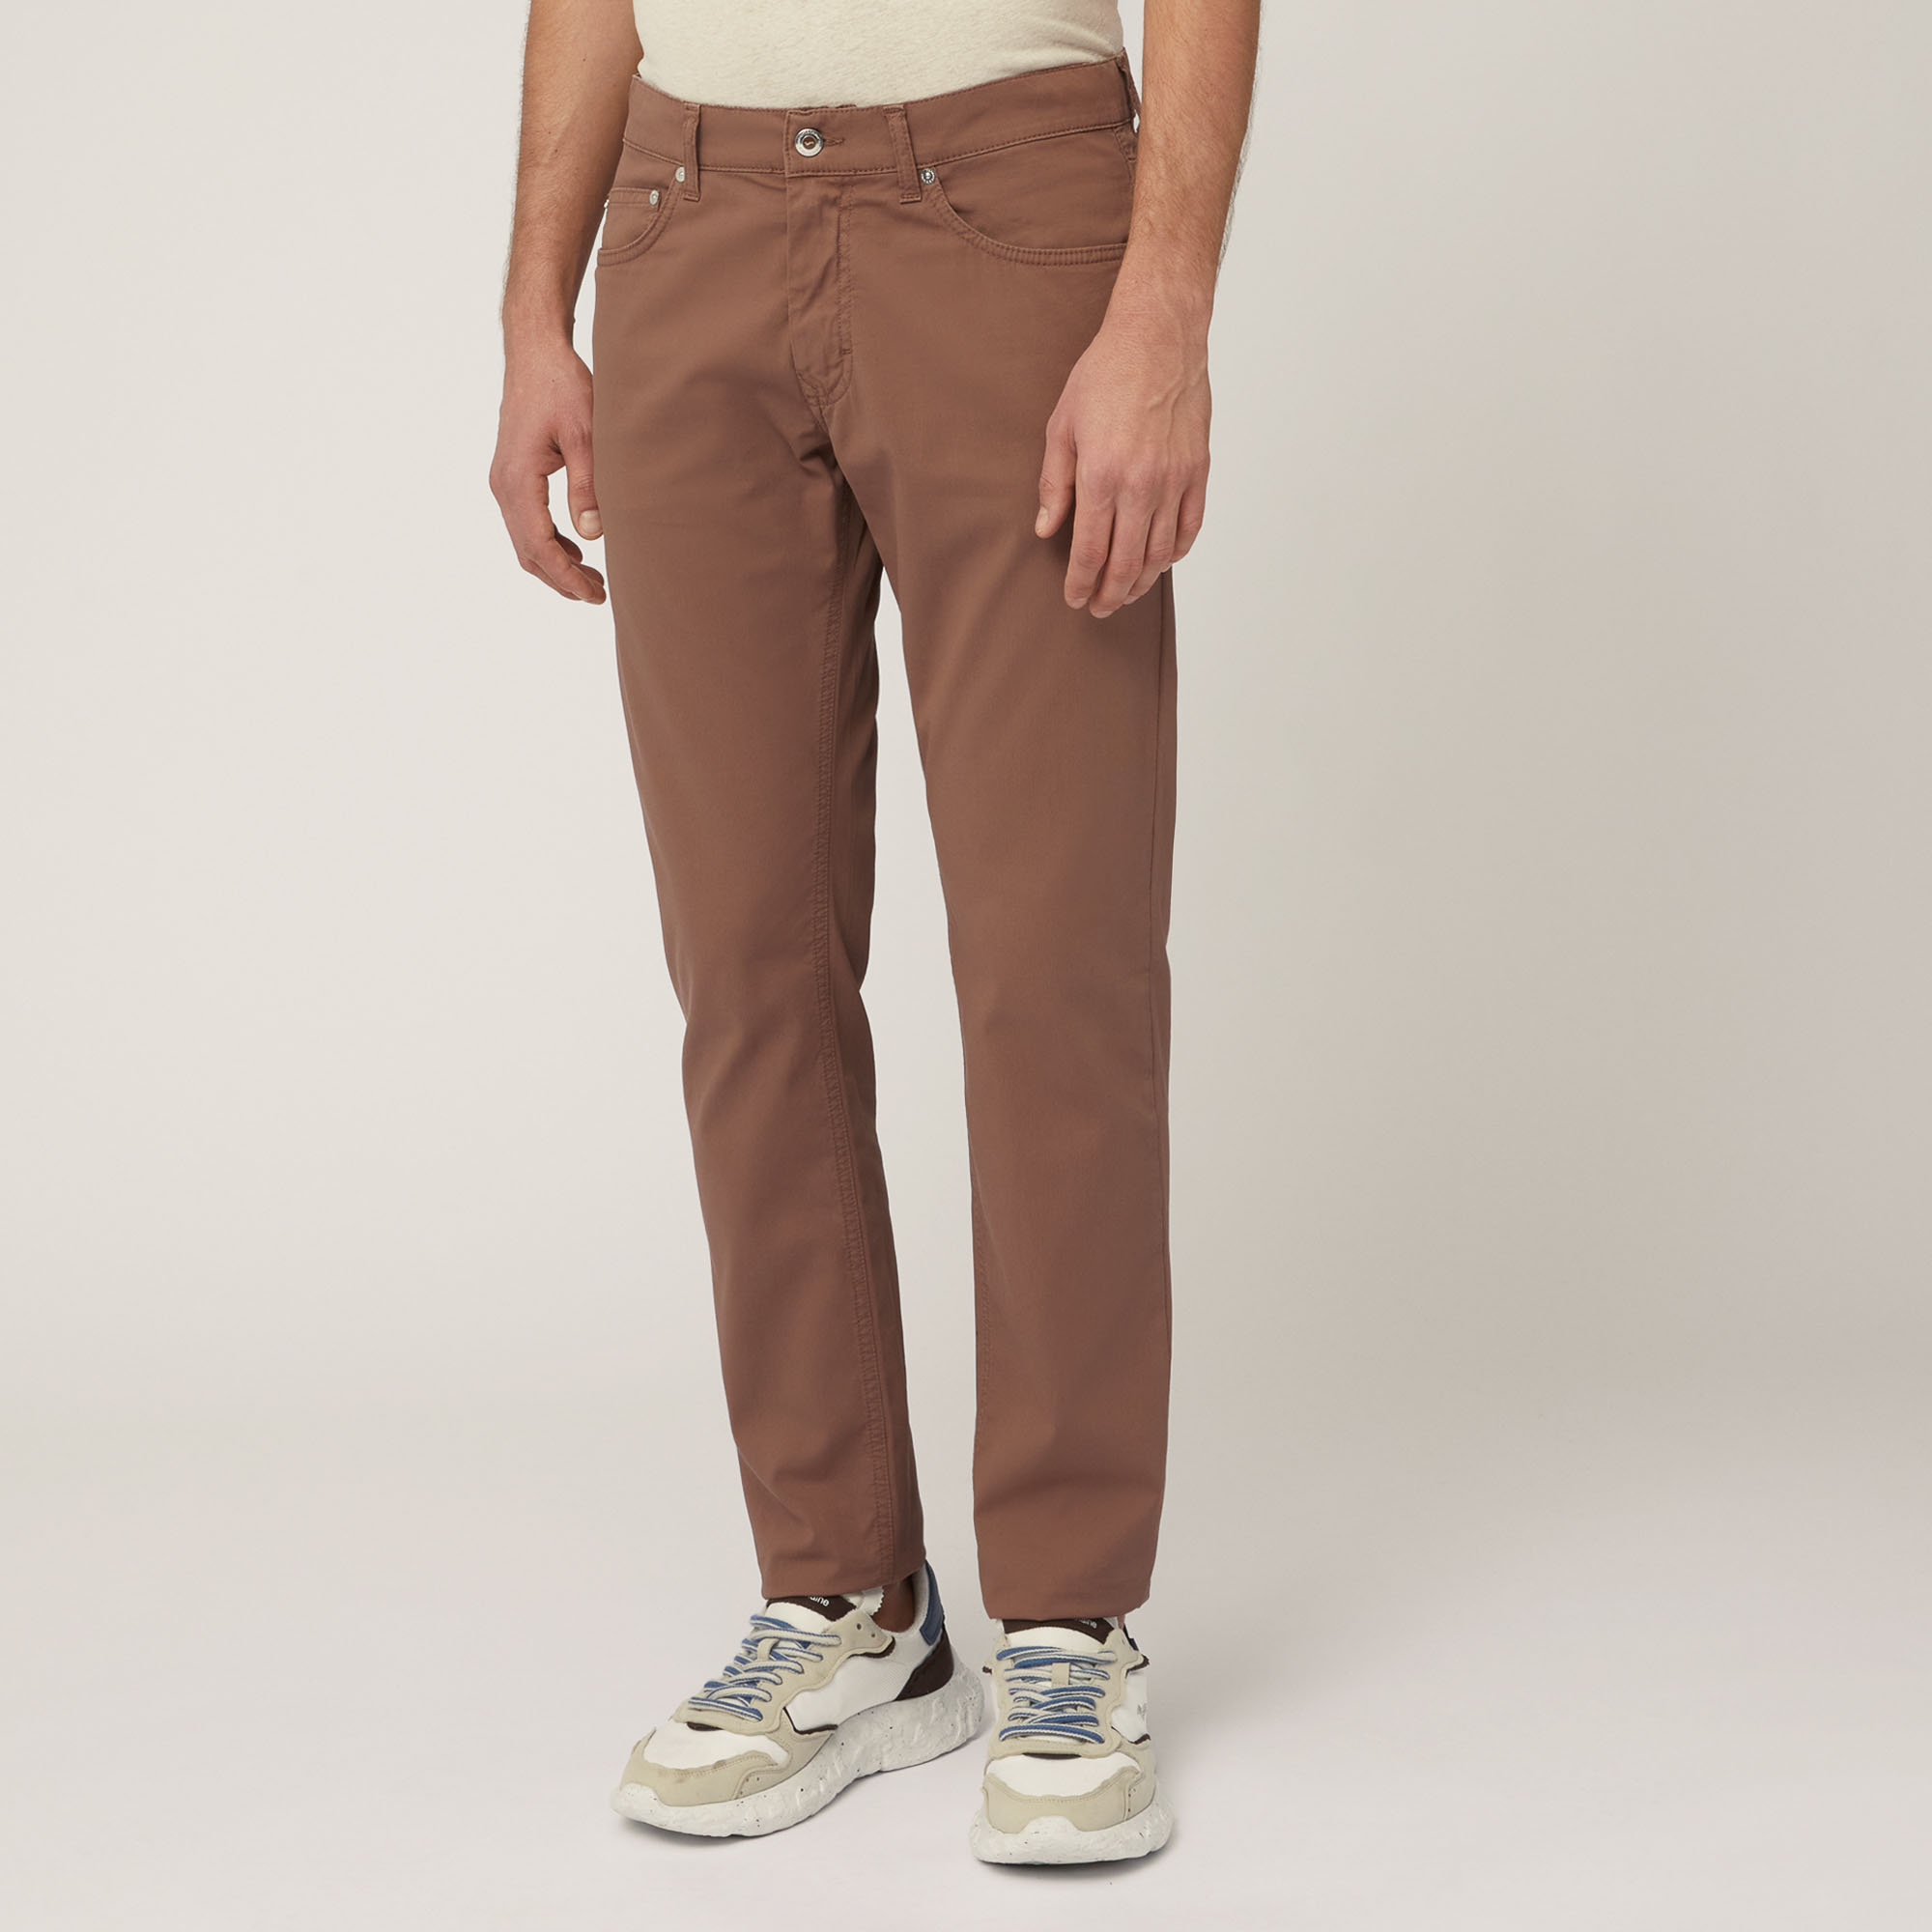 Narrow Five-Pocket Pants, Brown, large